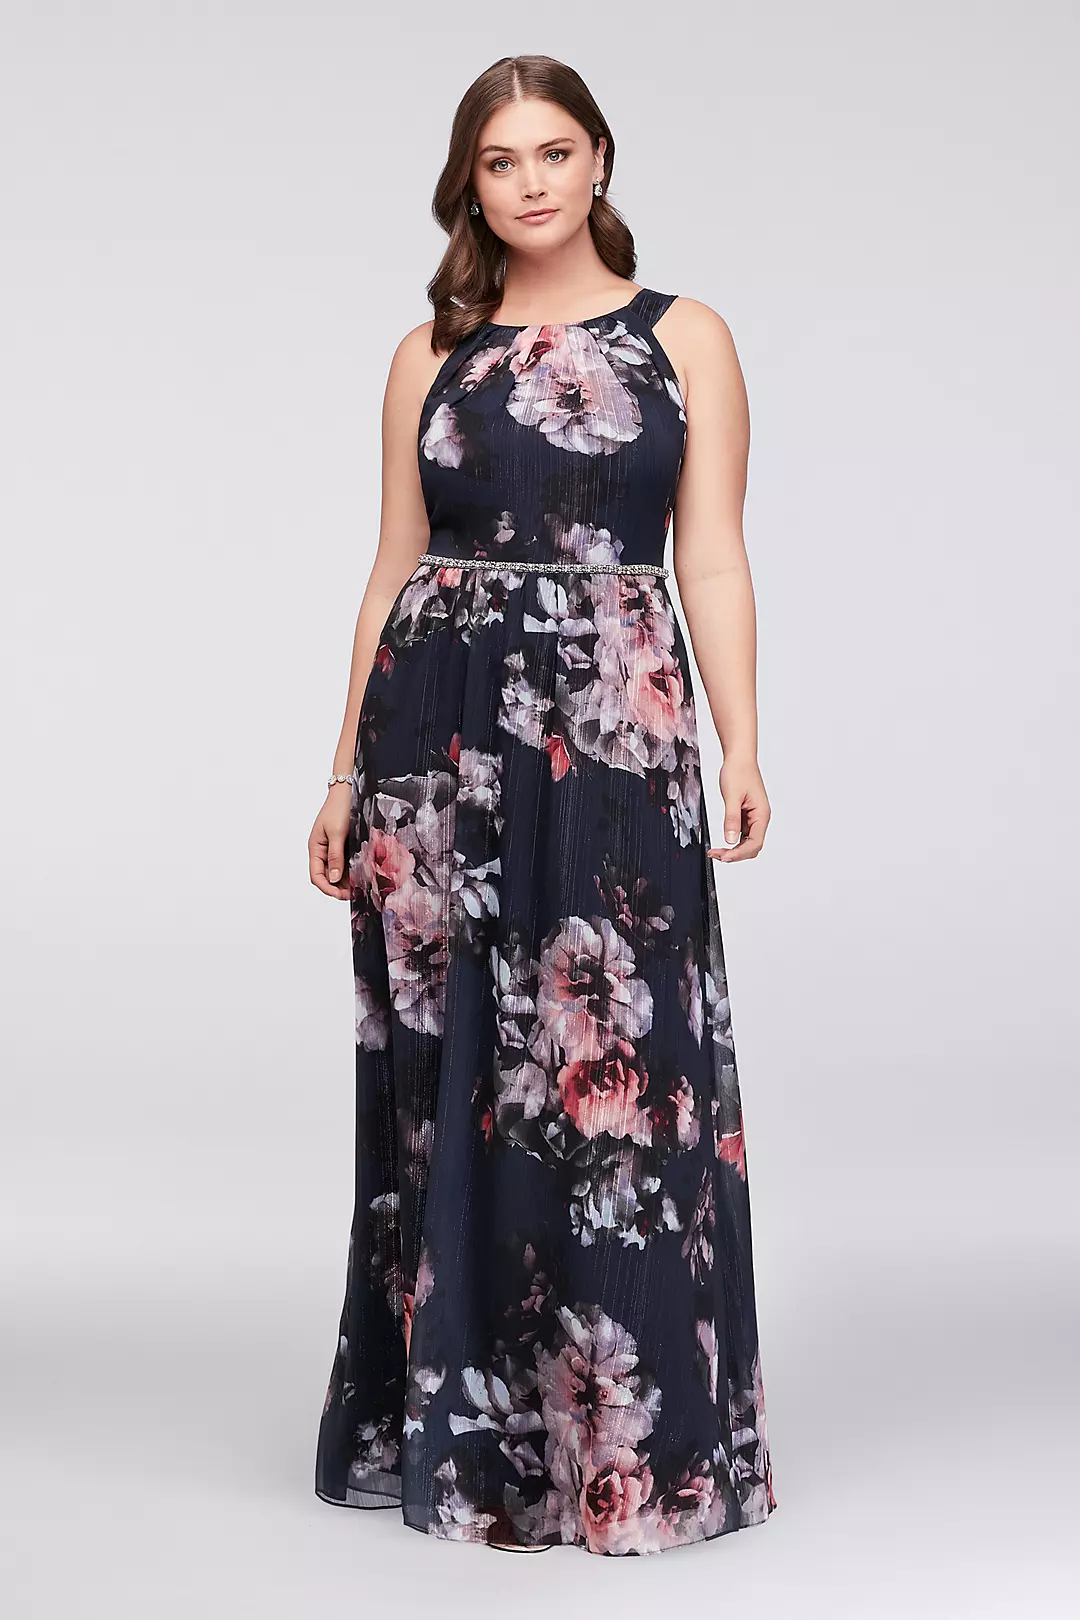 Floral Plus Size Halter Dress with Beaded Belt Image